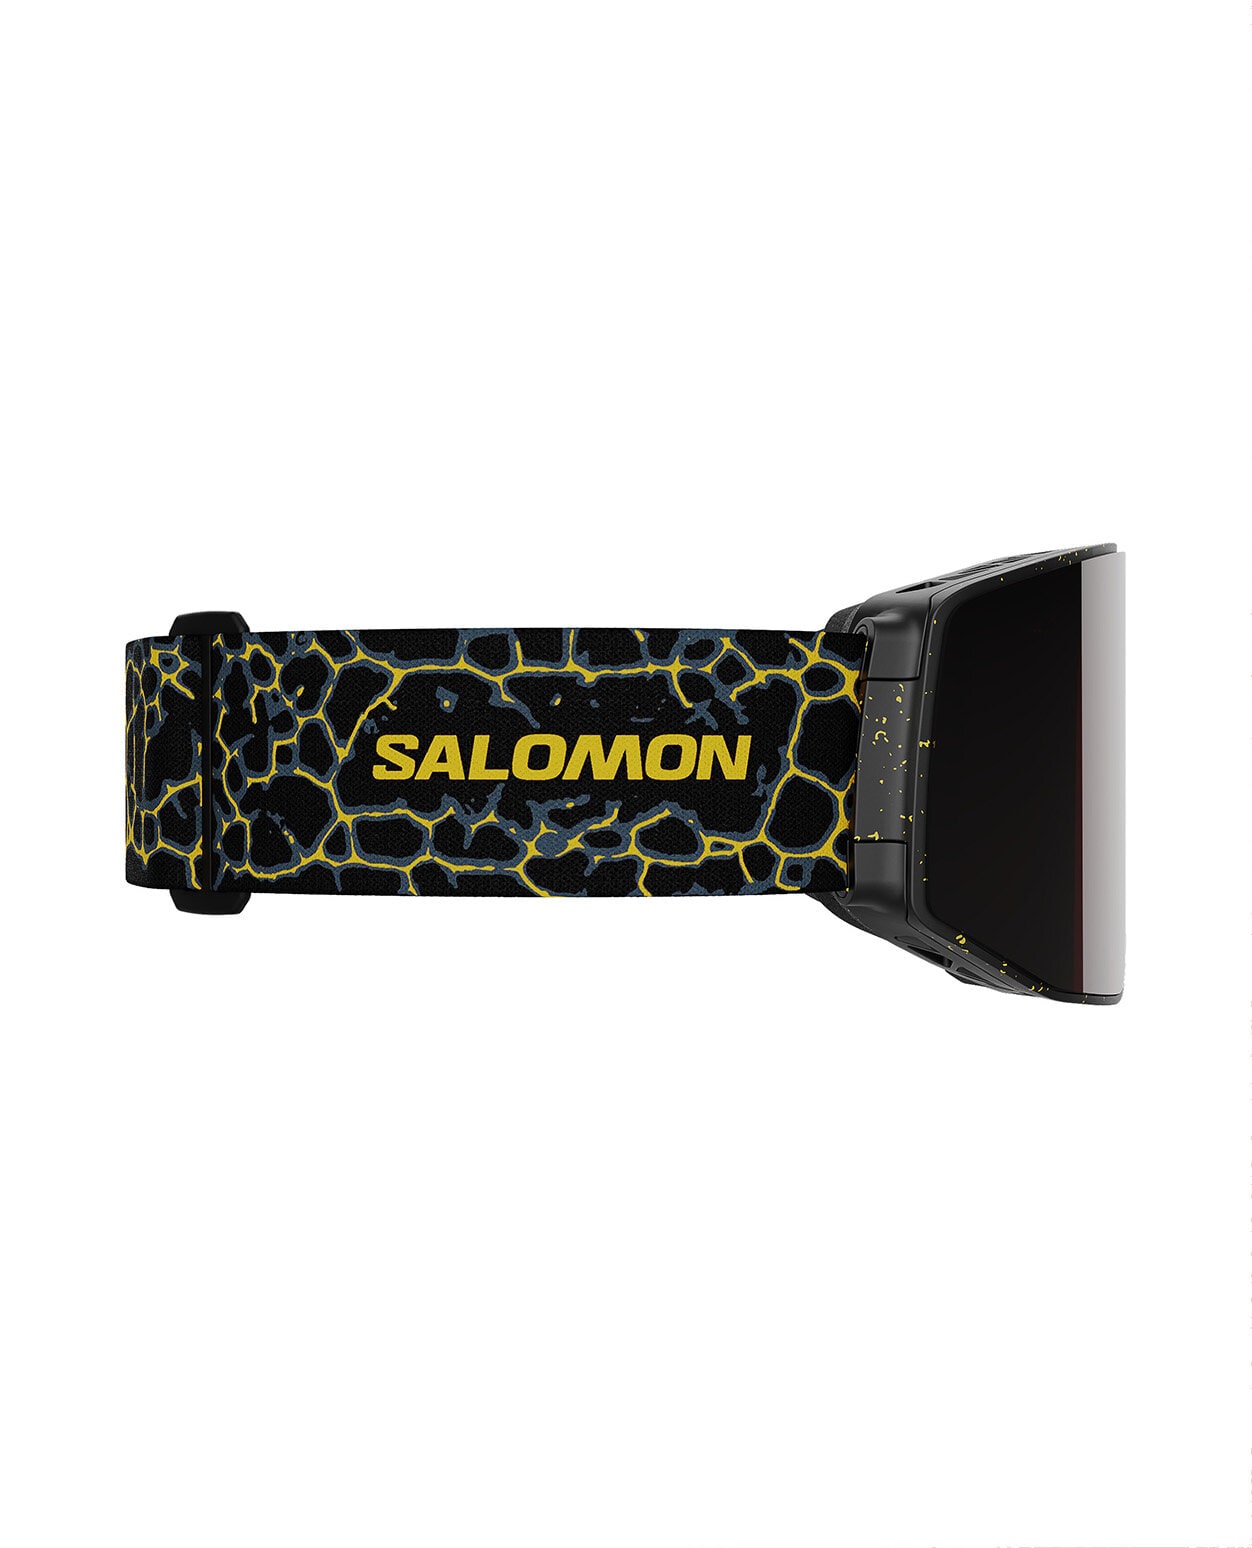 Salomon Sentry Prime Sigma Black LTD / Sigma Gun Metal